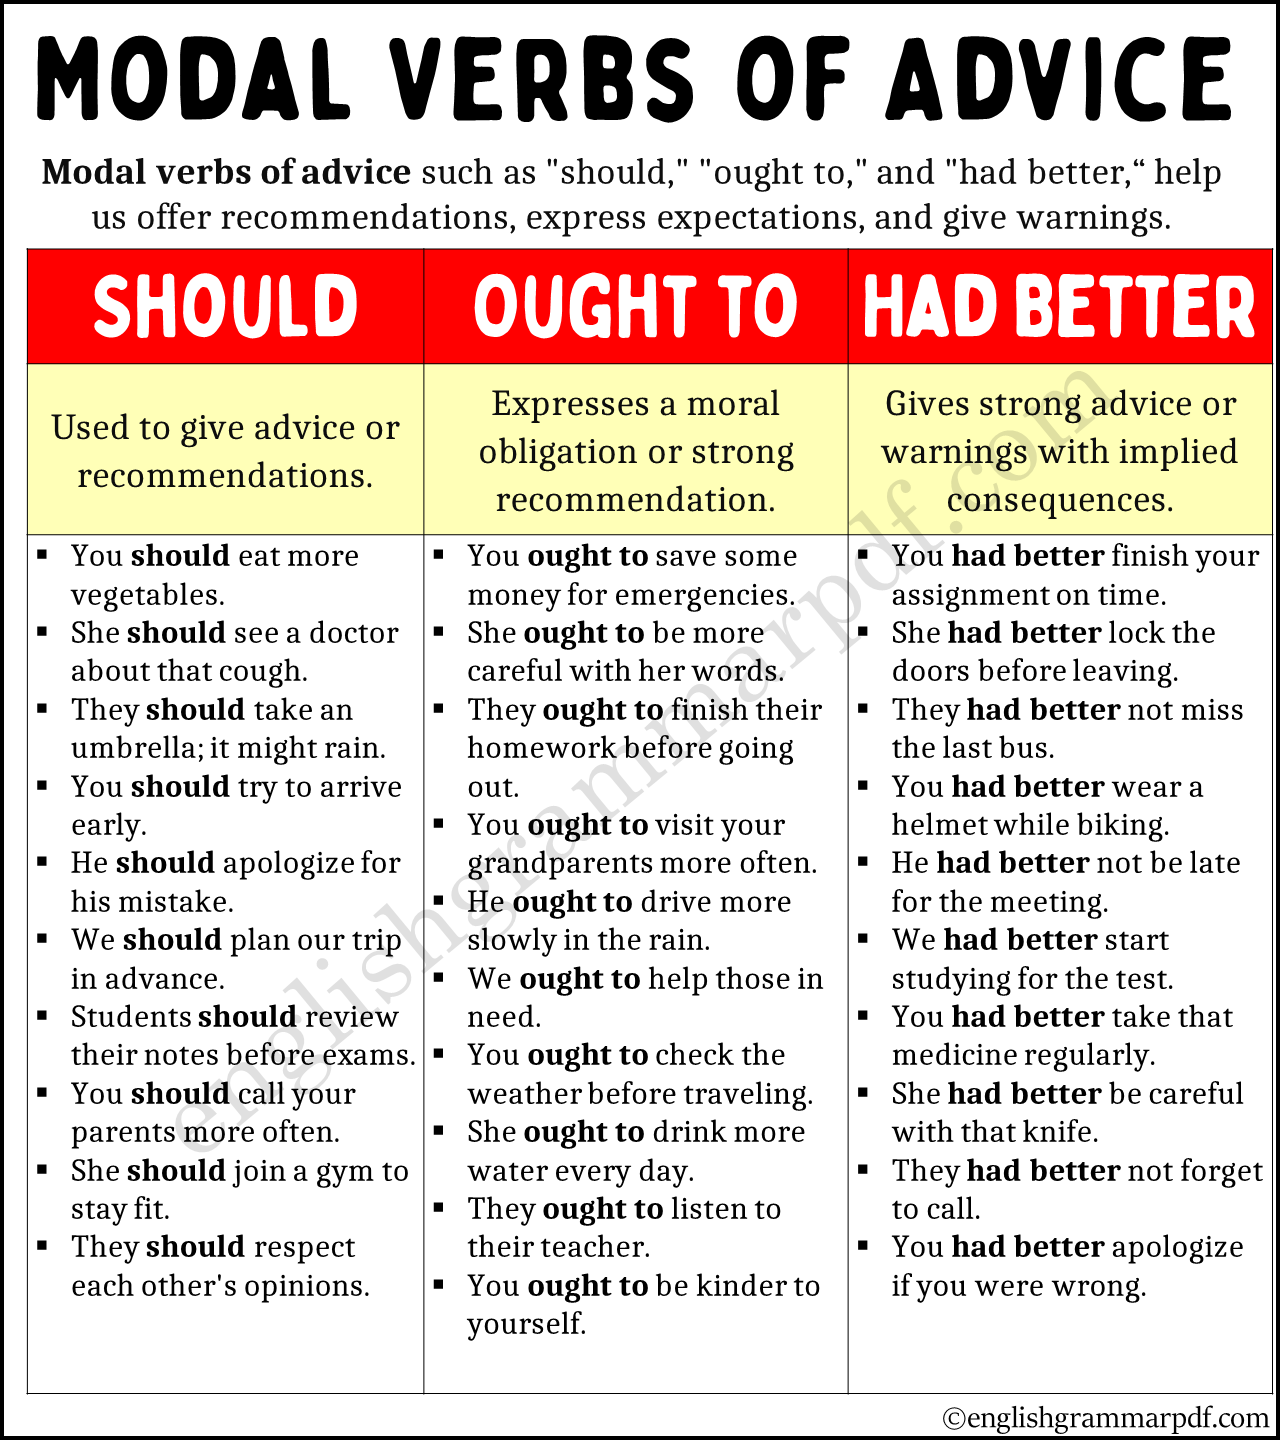 Modal Verbs of Advice